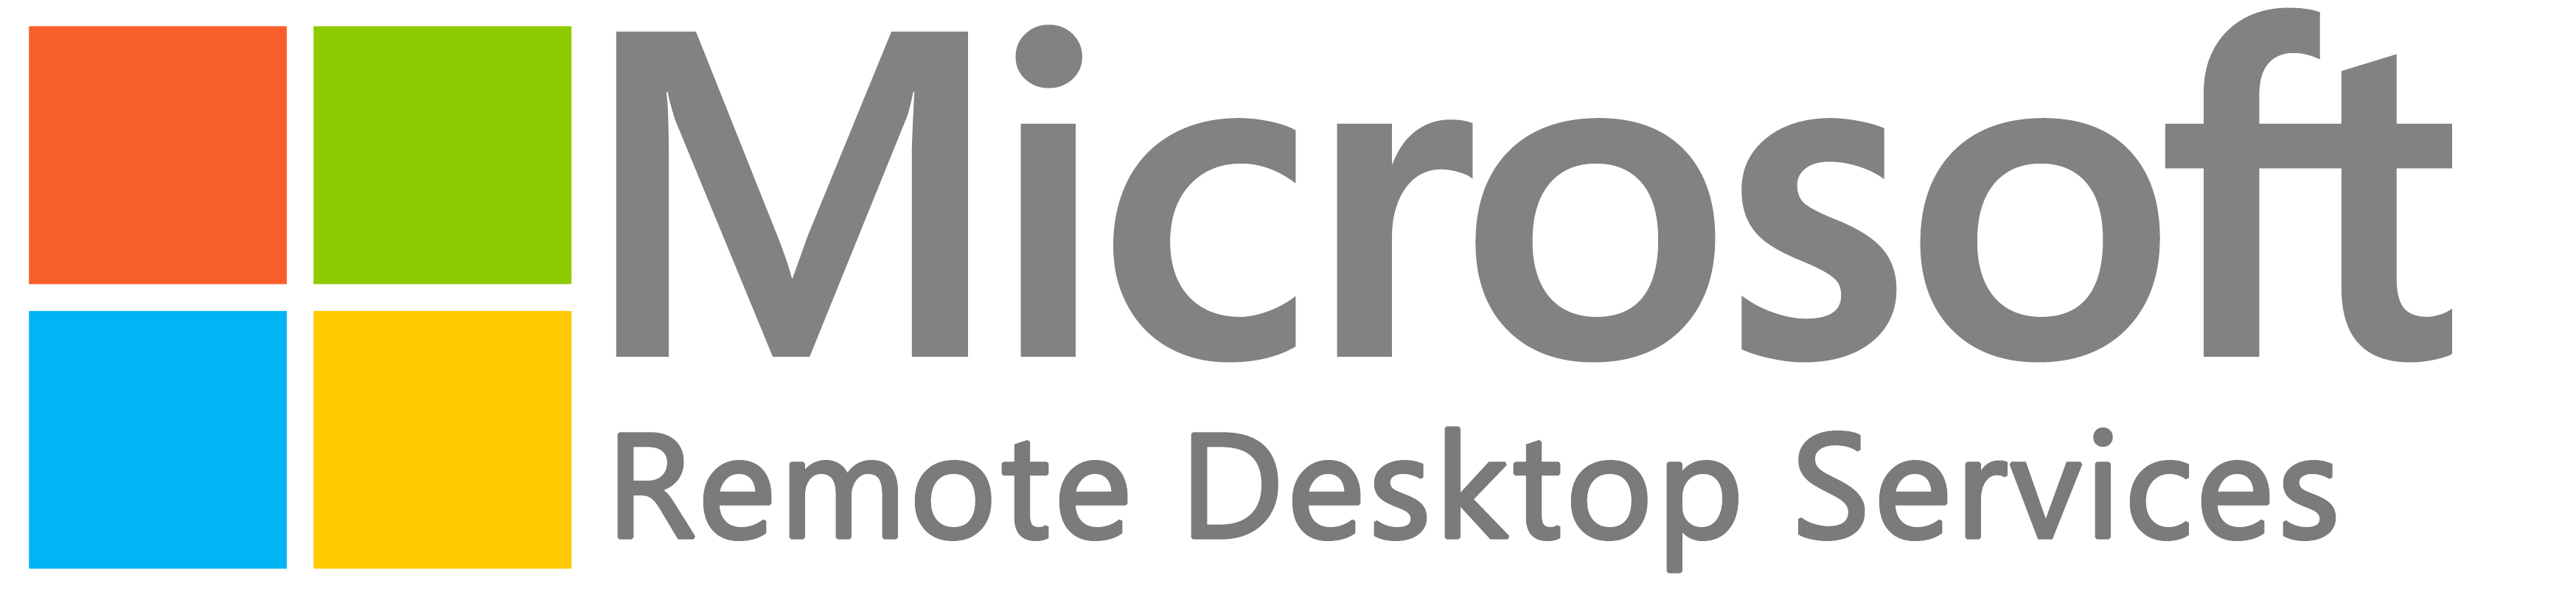 Дополнительная лицензия HPE Windows Remote Desktop Services CAL 2019, Multi Language, 5 Device CAL, OEM (P11074-A21)